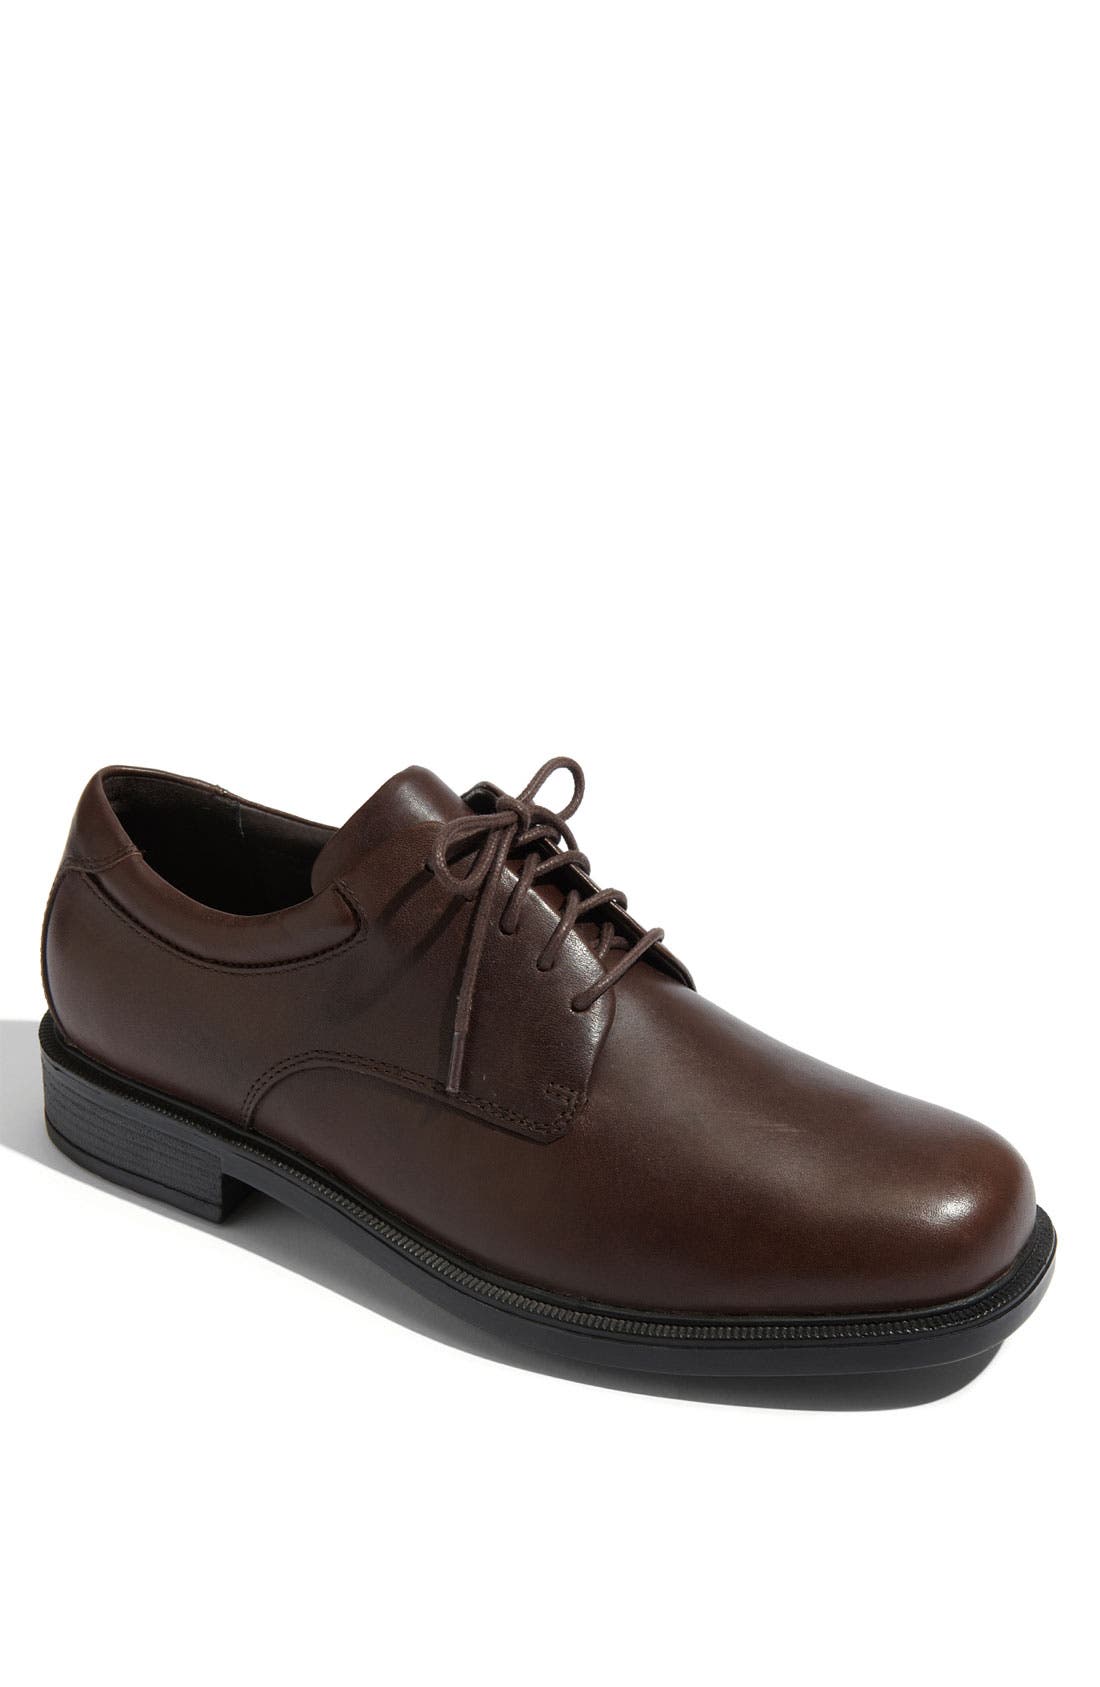 Rockport Men's Black or Brown Impedor Oxford Shoes NIB